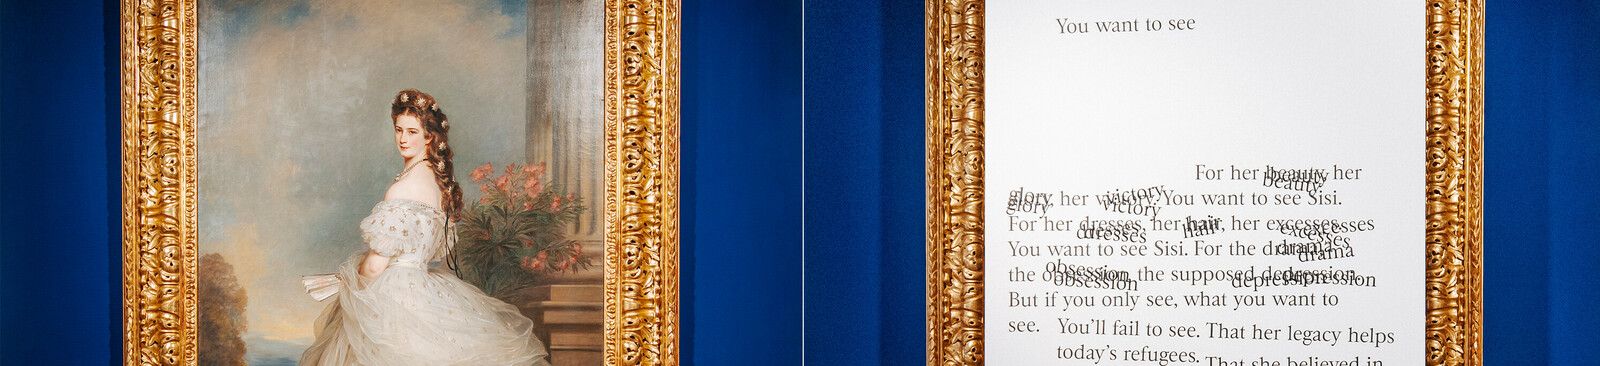 Sisi by Winterhalter vs New Portrait at Vienna Furnitur Museum